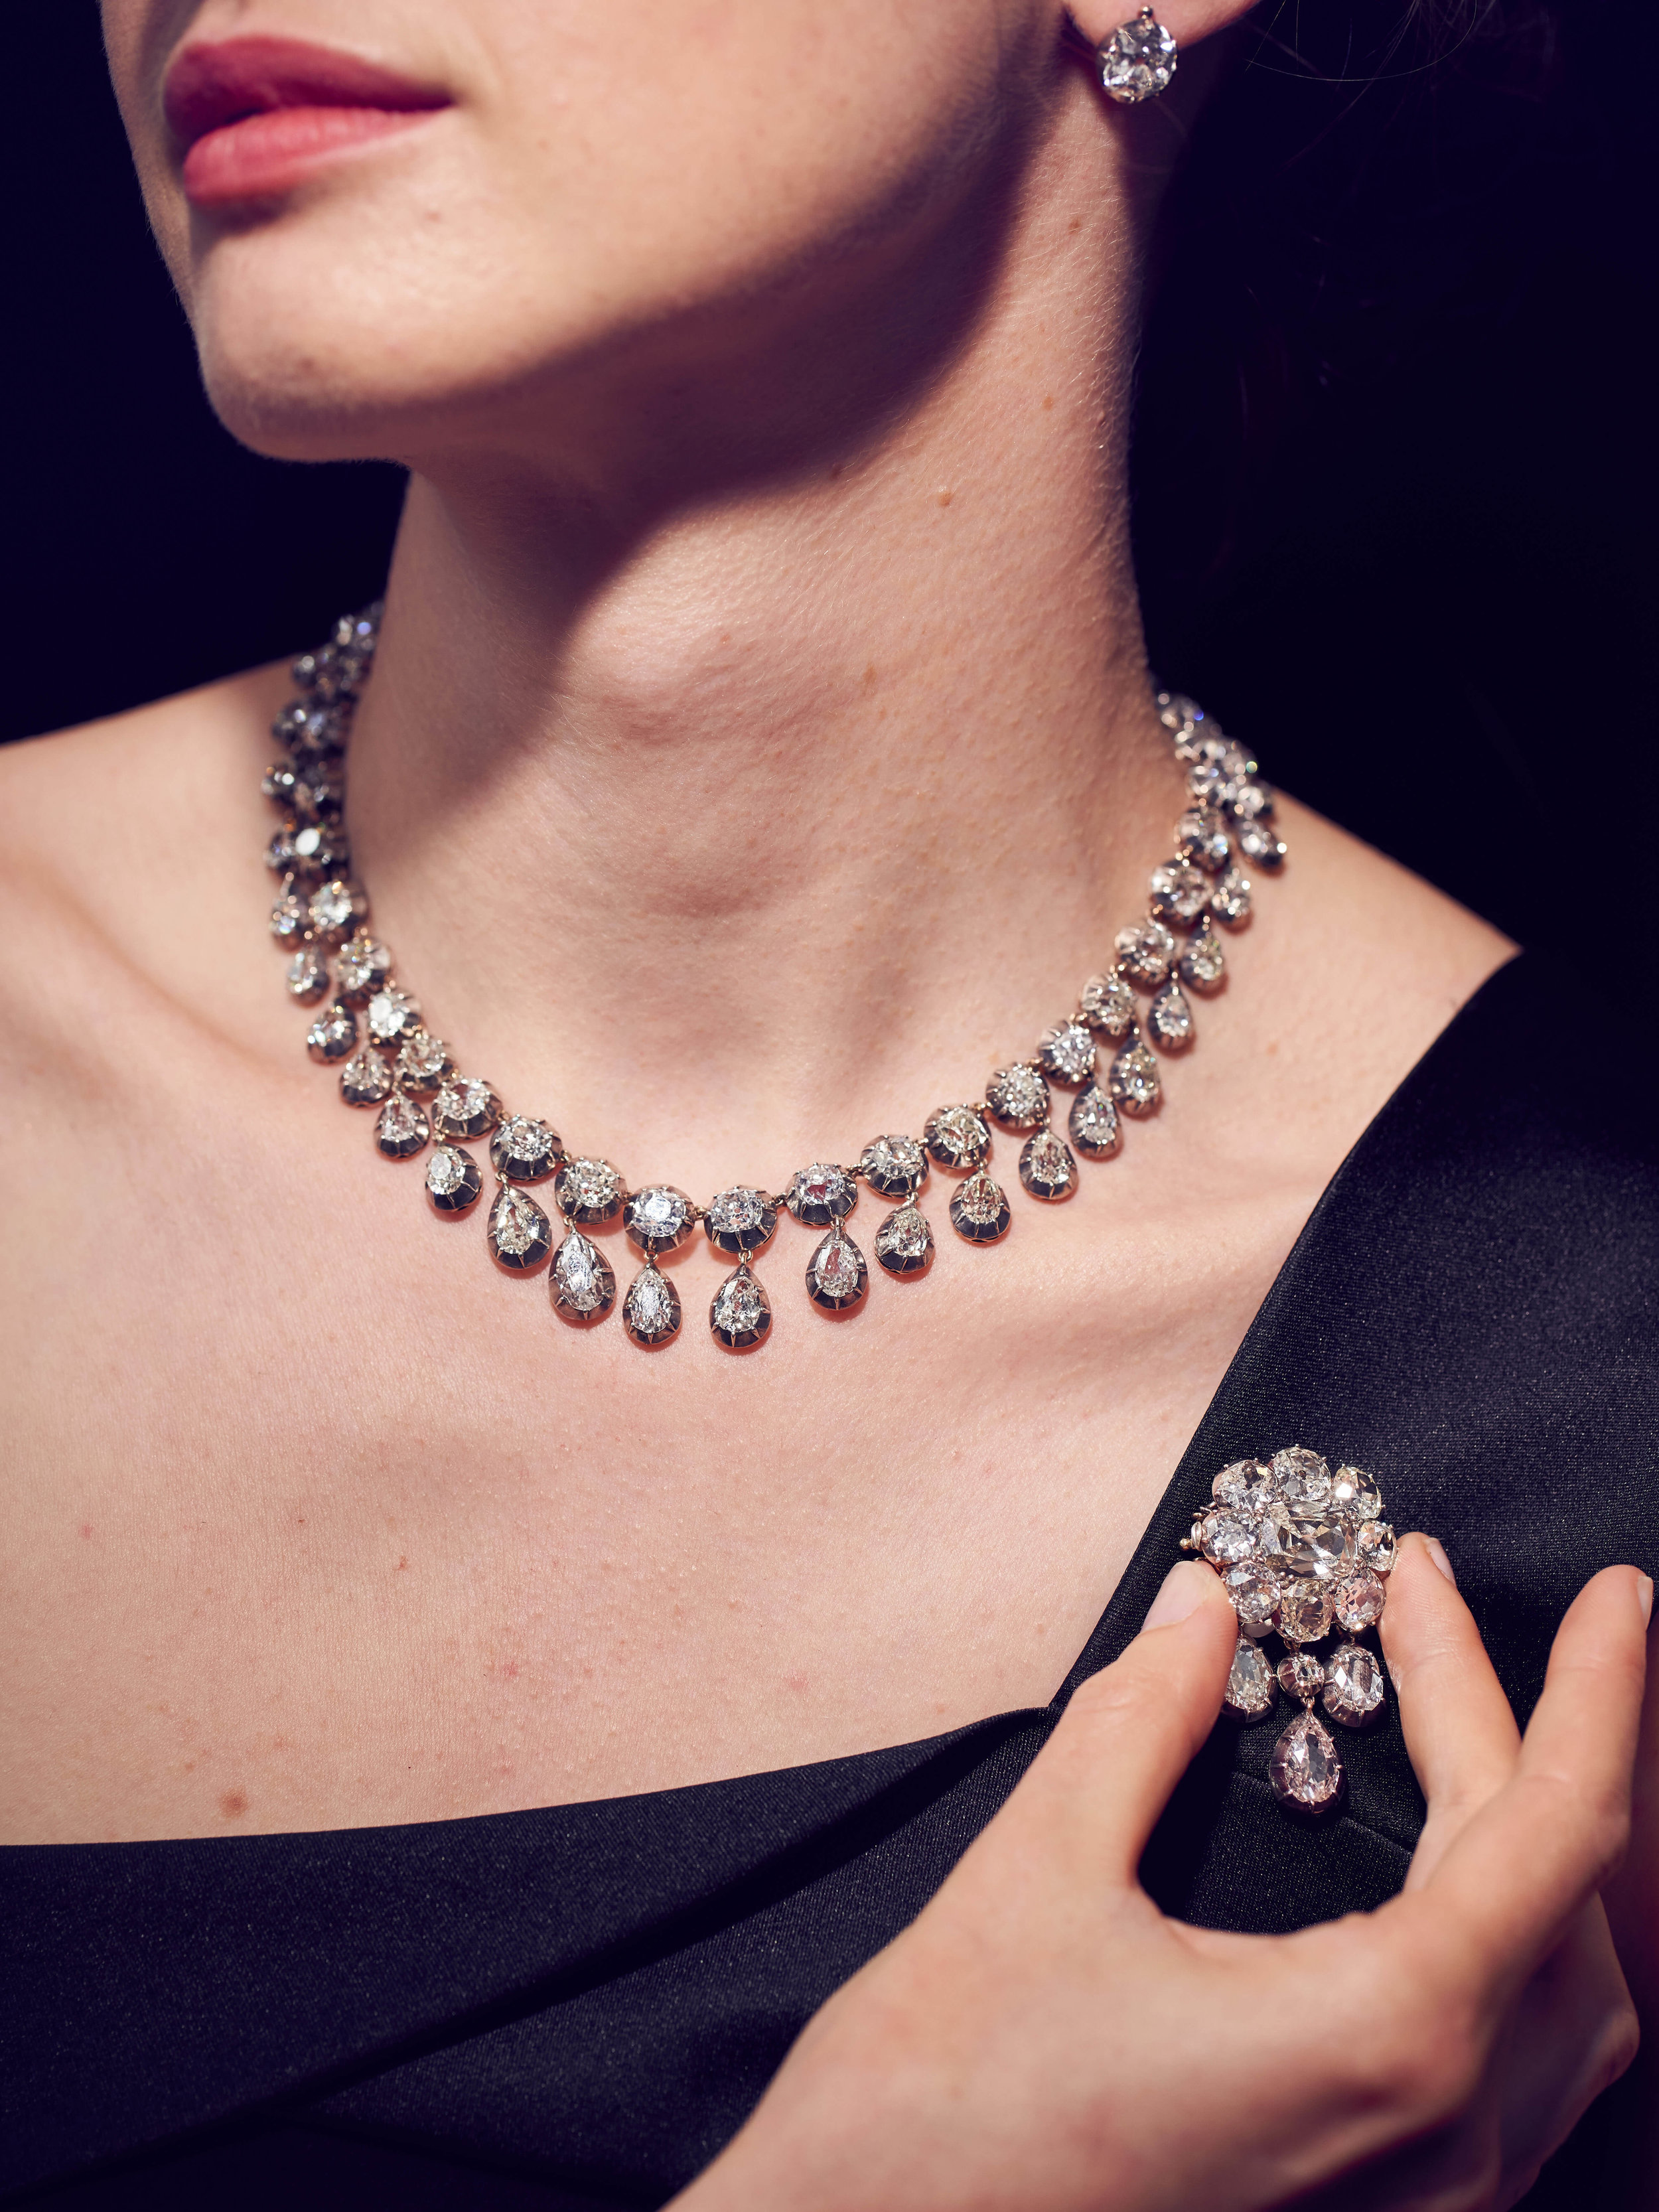 Marie Antoinette Chanel -inspired Diamond Necklace.